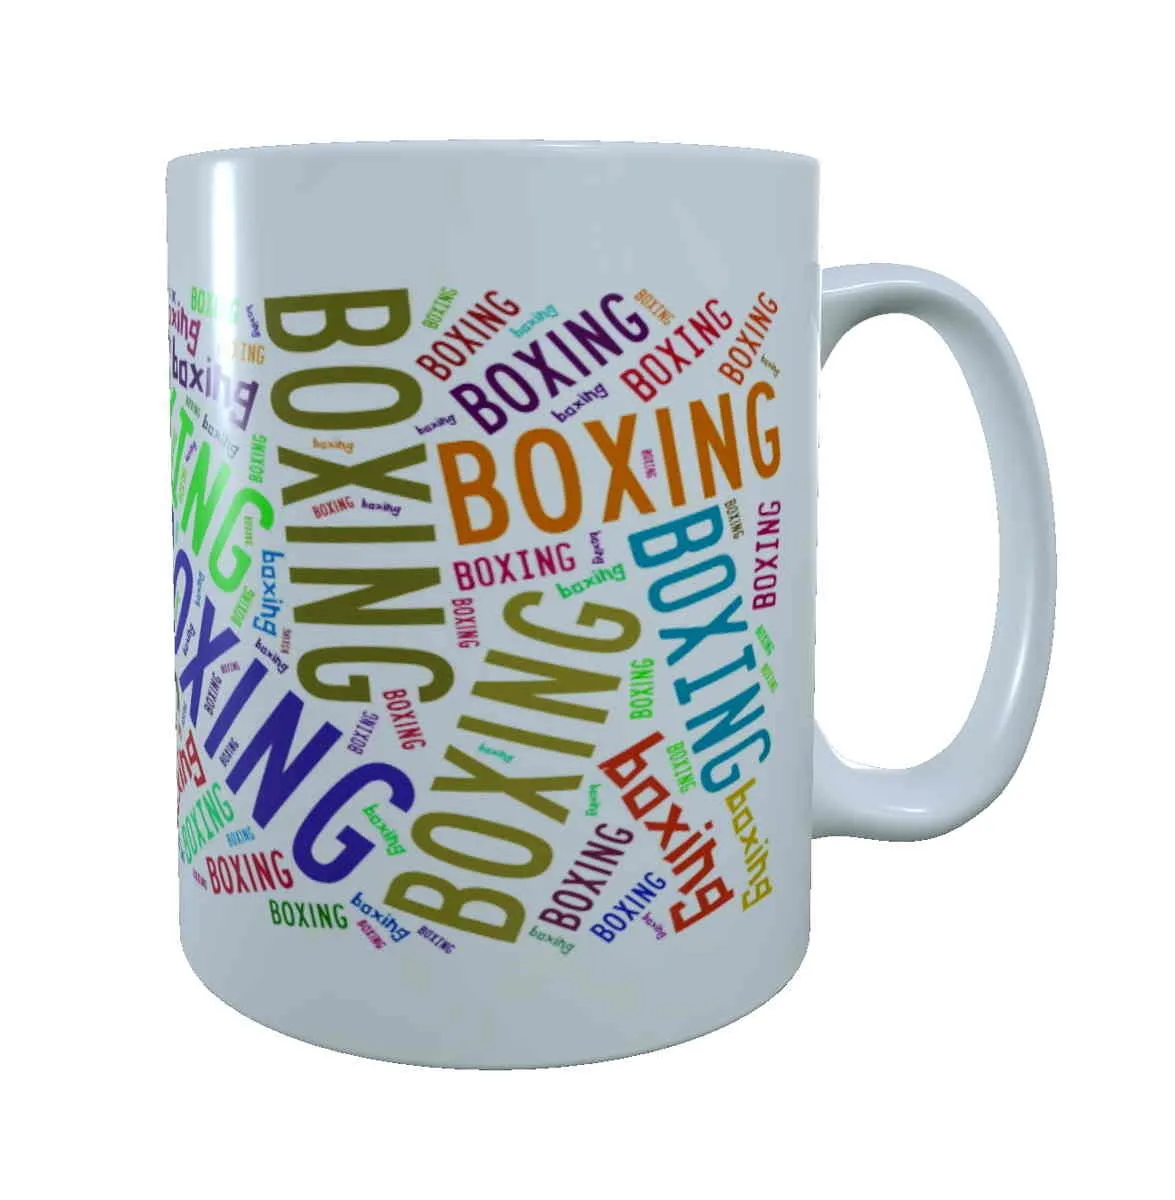 Tasse blanche imprimee avec Boxing multicolore